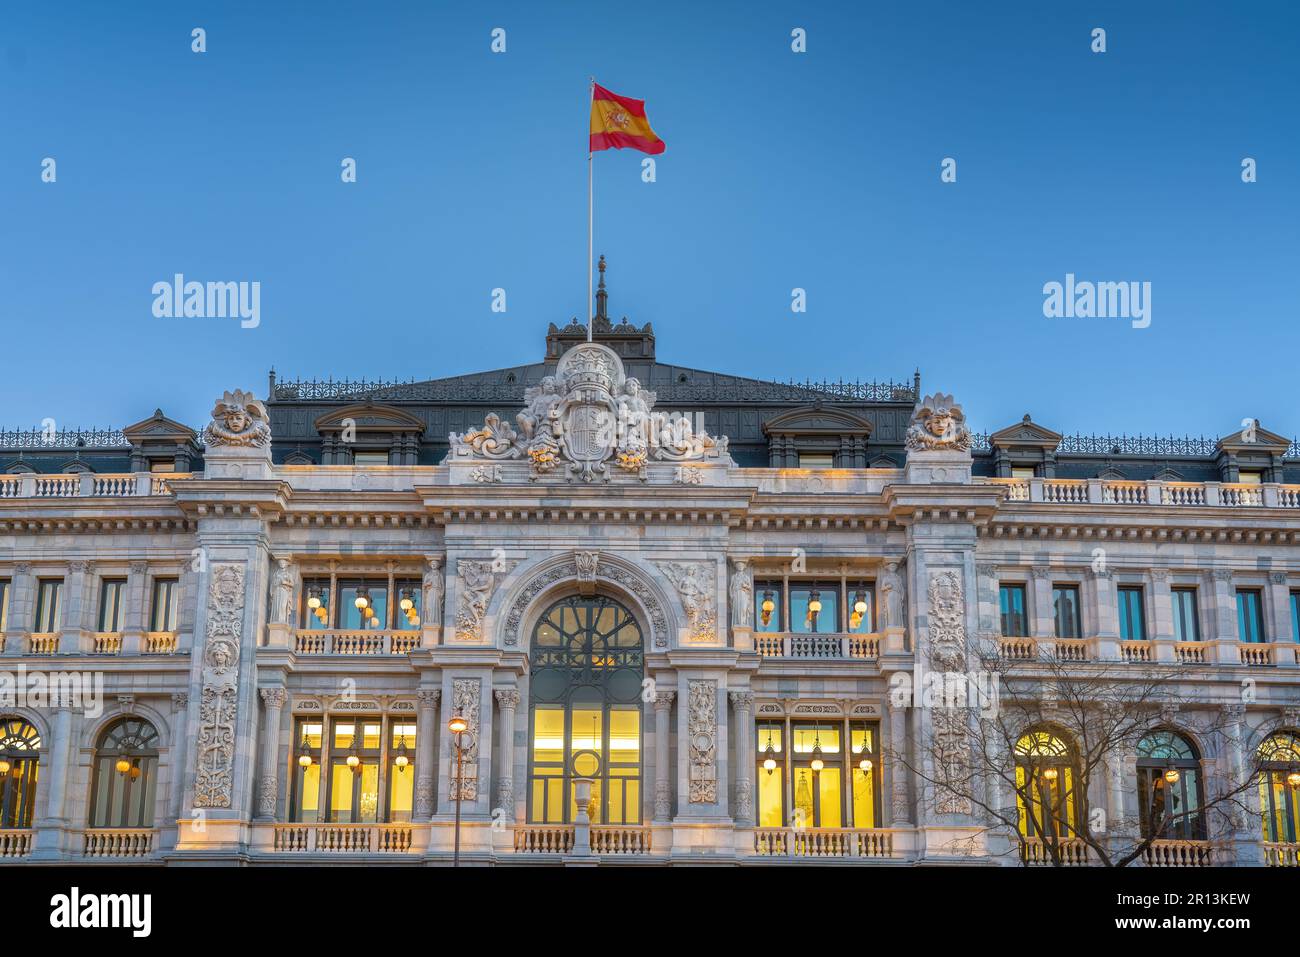 Bank of Spain (Banco de España) - Central bank of Spain - Madrid, Spain Stock Photo